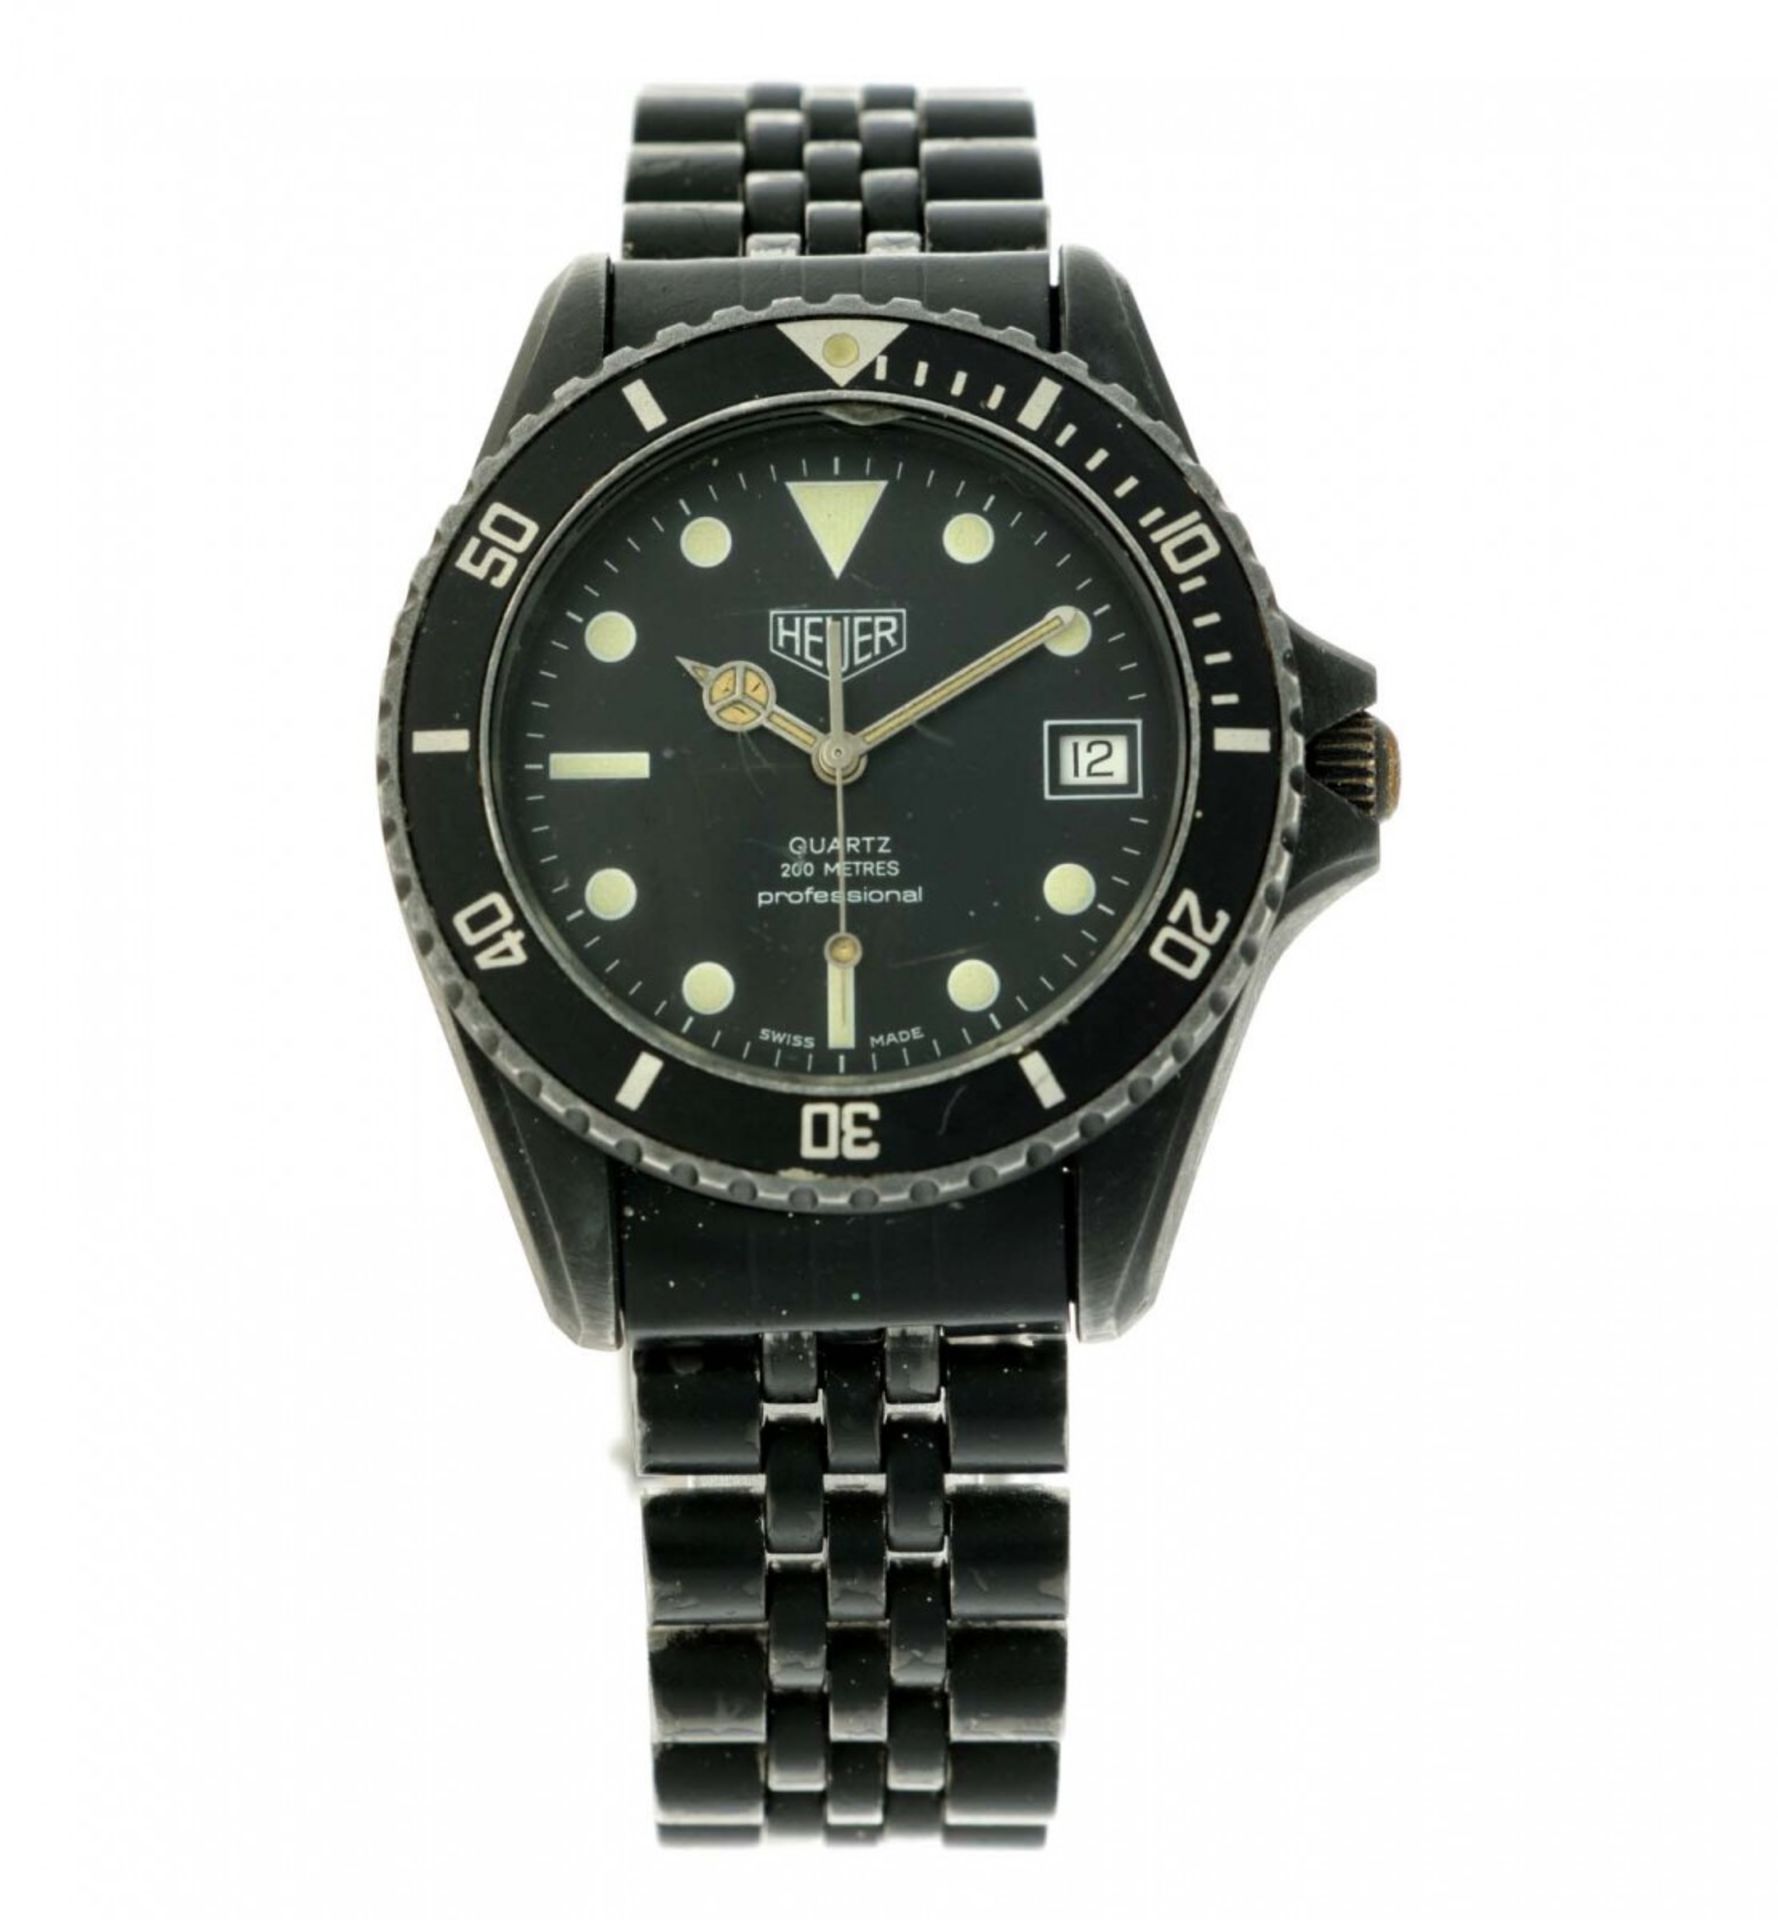 Heuer - 200 professional - Men's Watch - appr. 1980